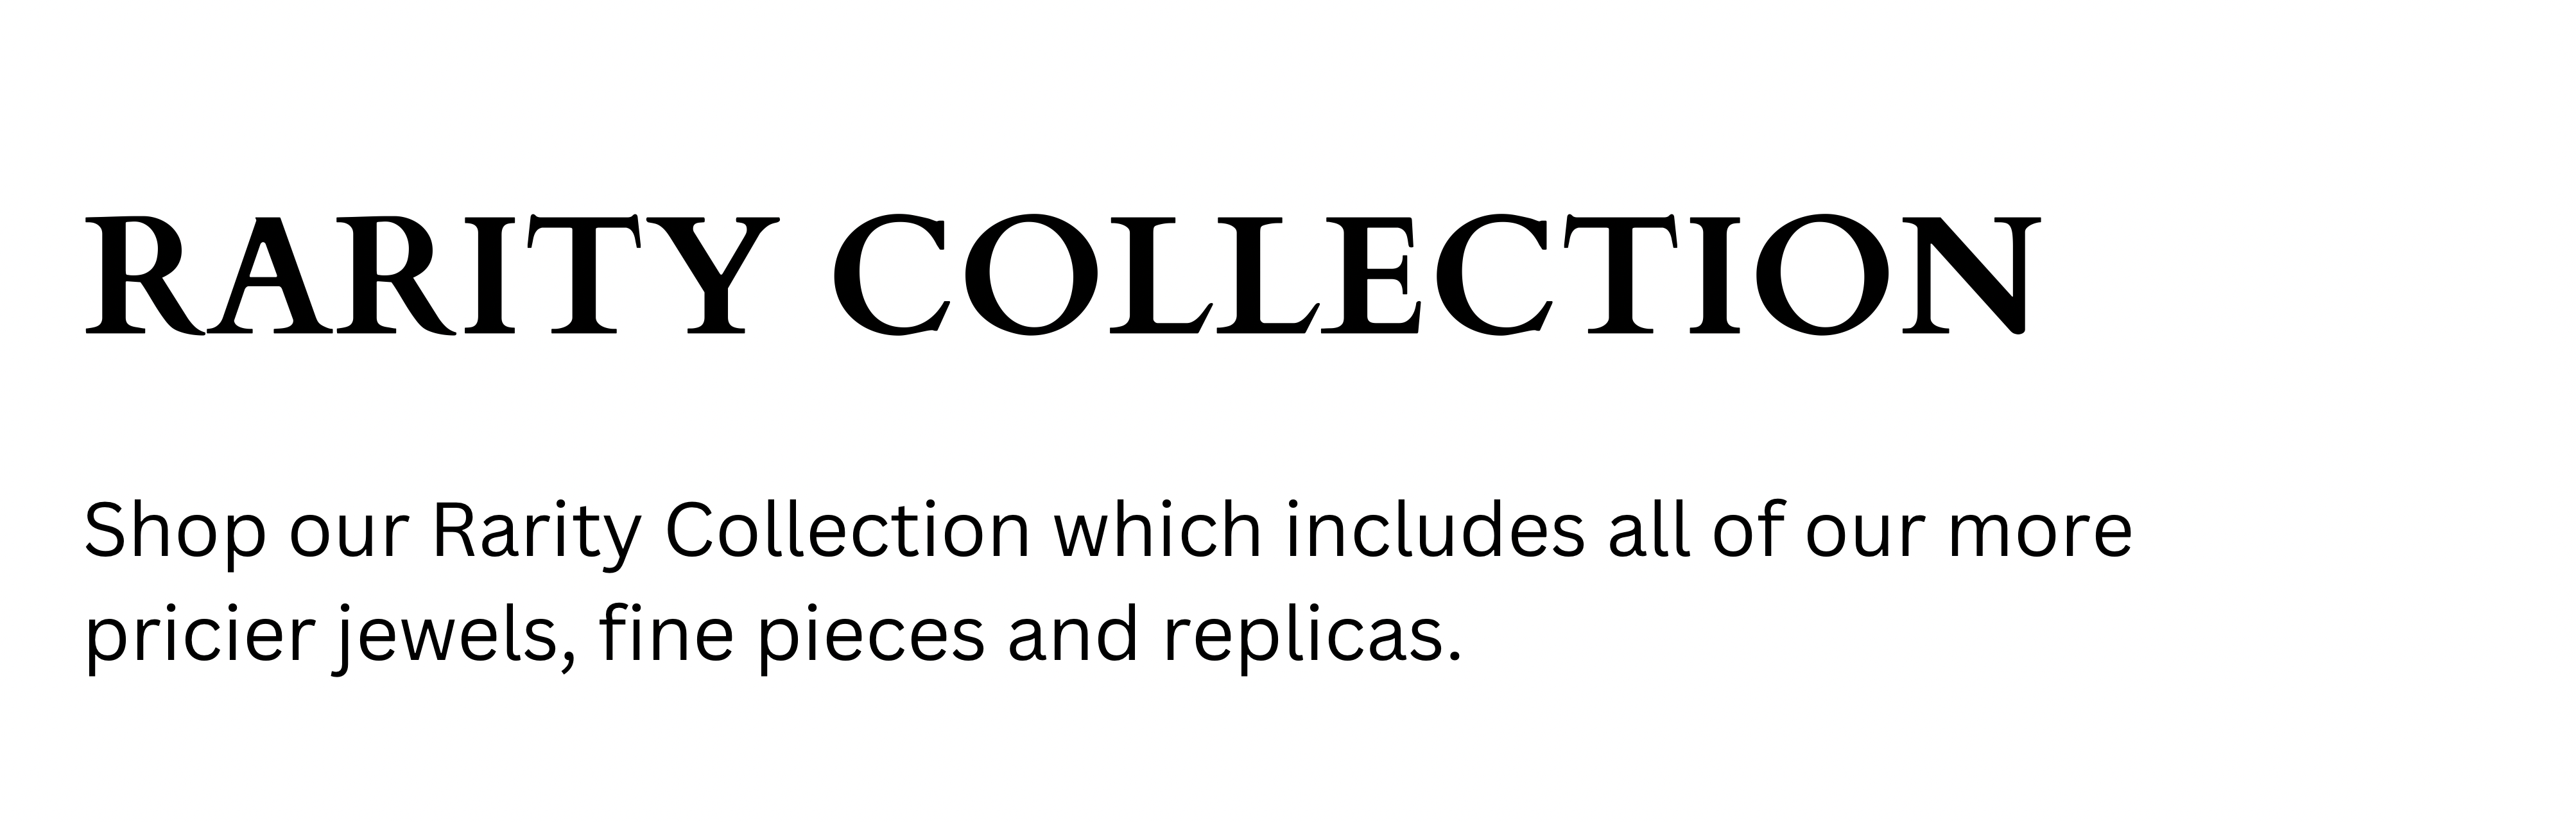 Rarity collection